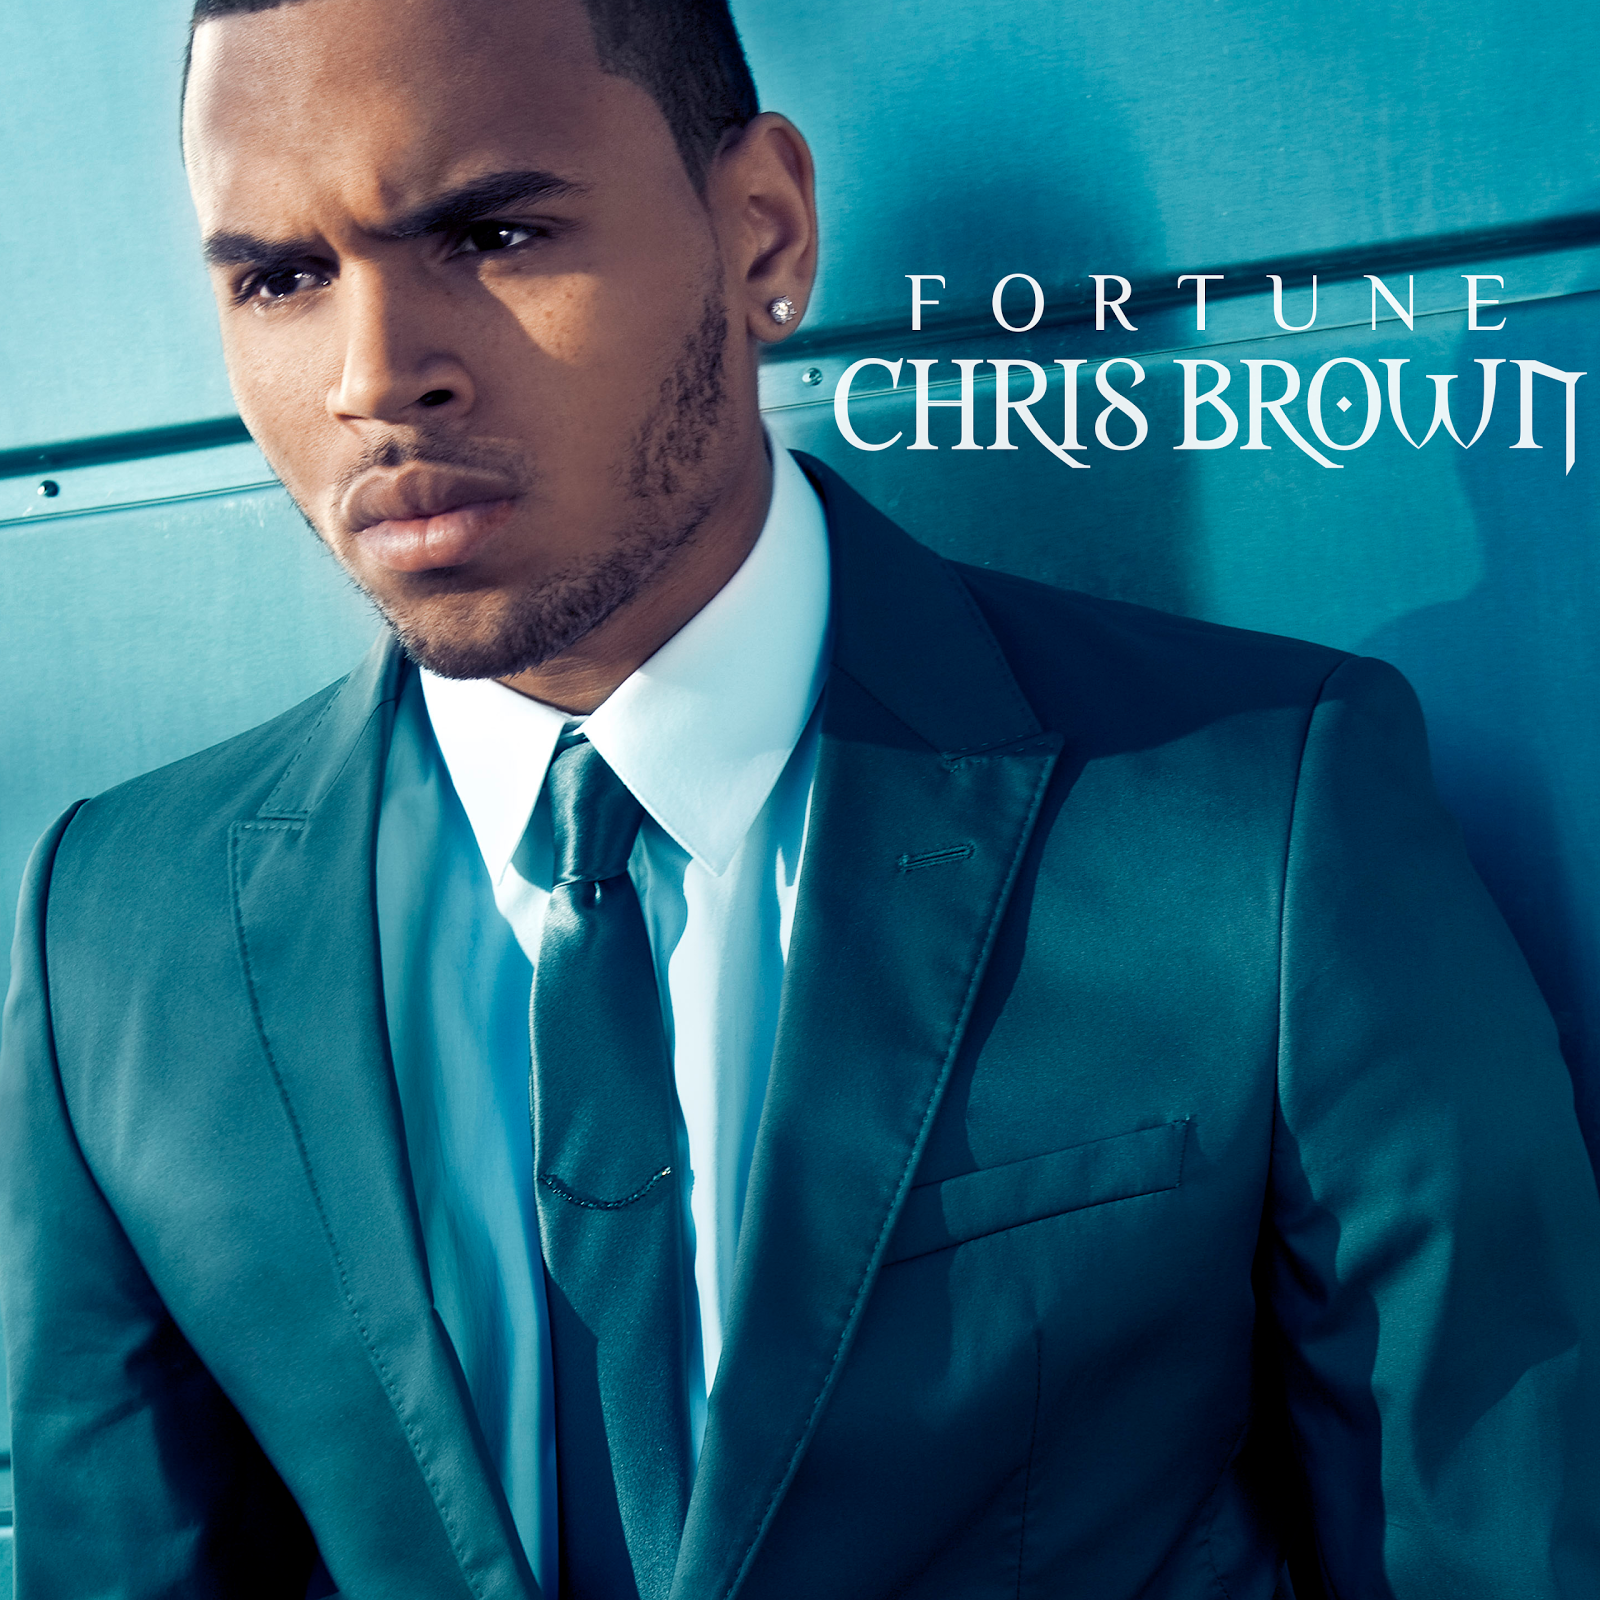 lilbadboy0: Chris Brown - Fortune (Album Cover)